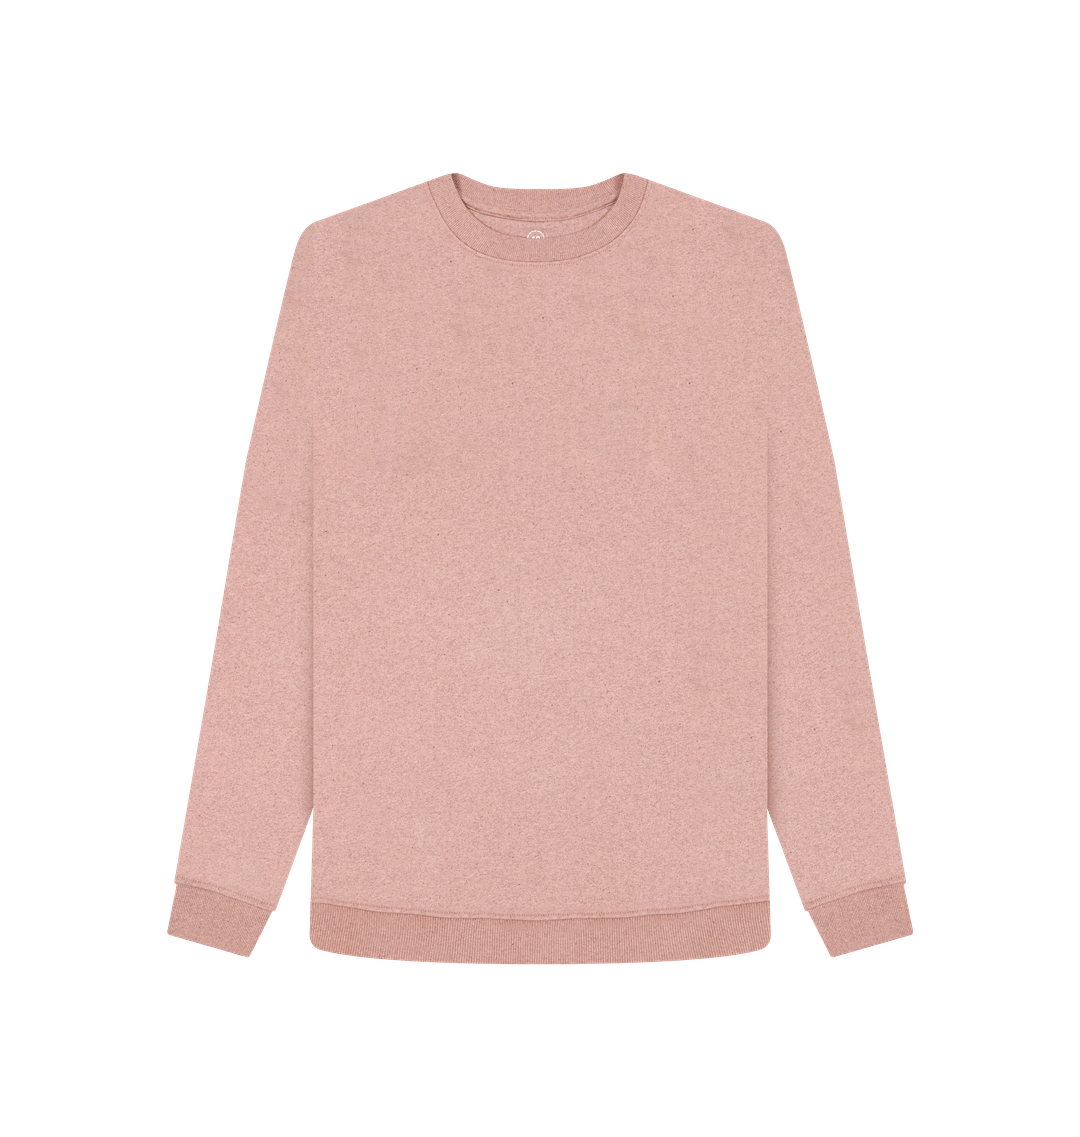 Recycled Women's Sweatshirt | Circular Fashion